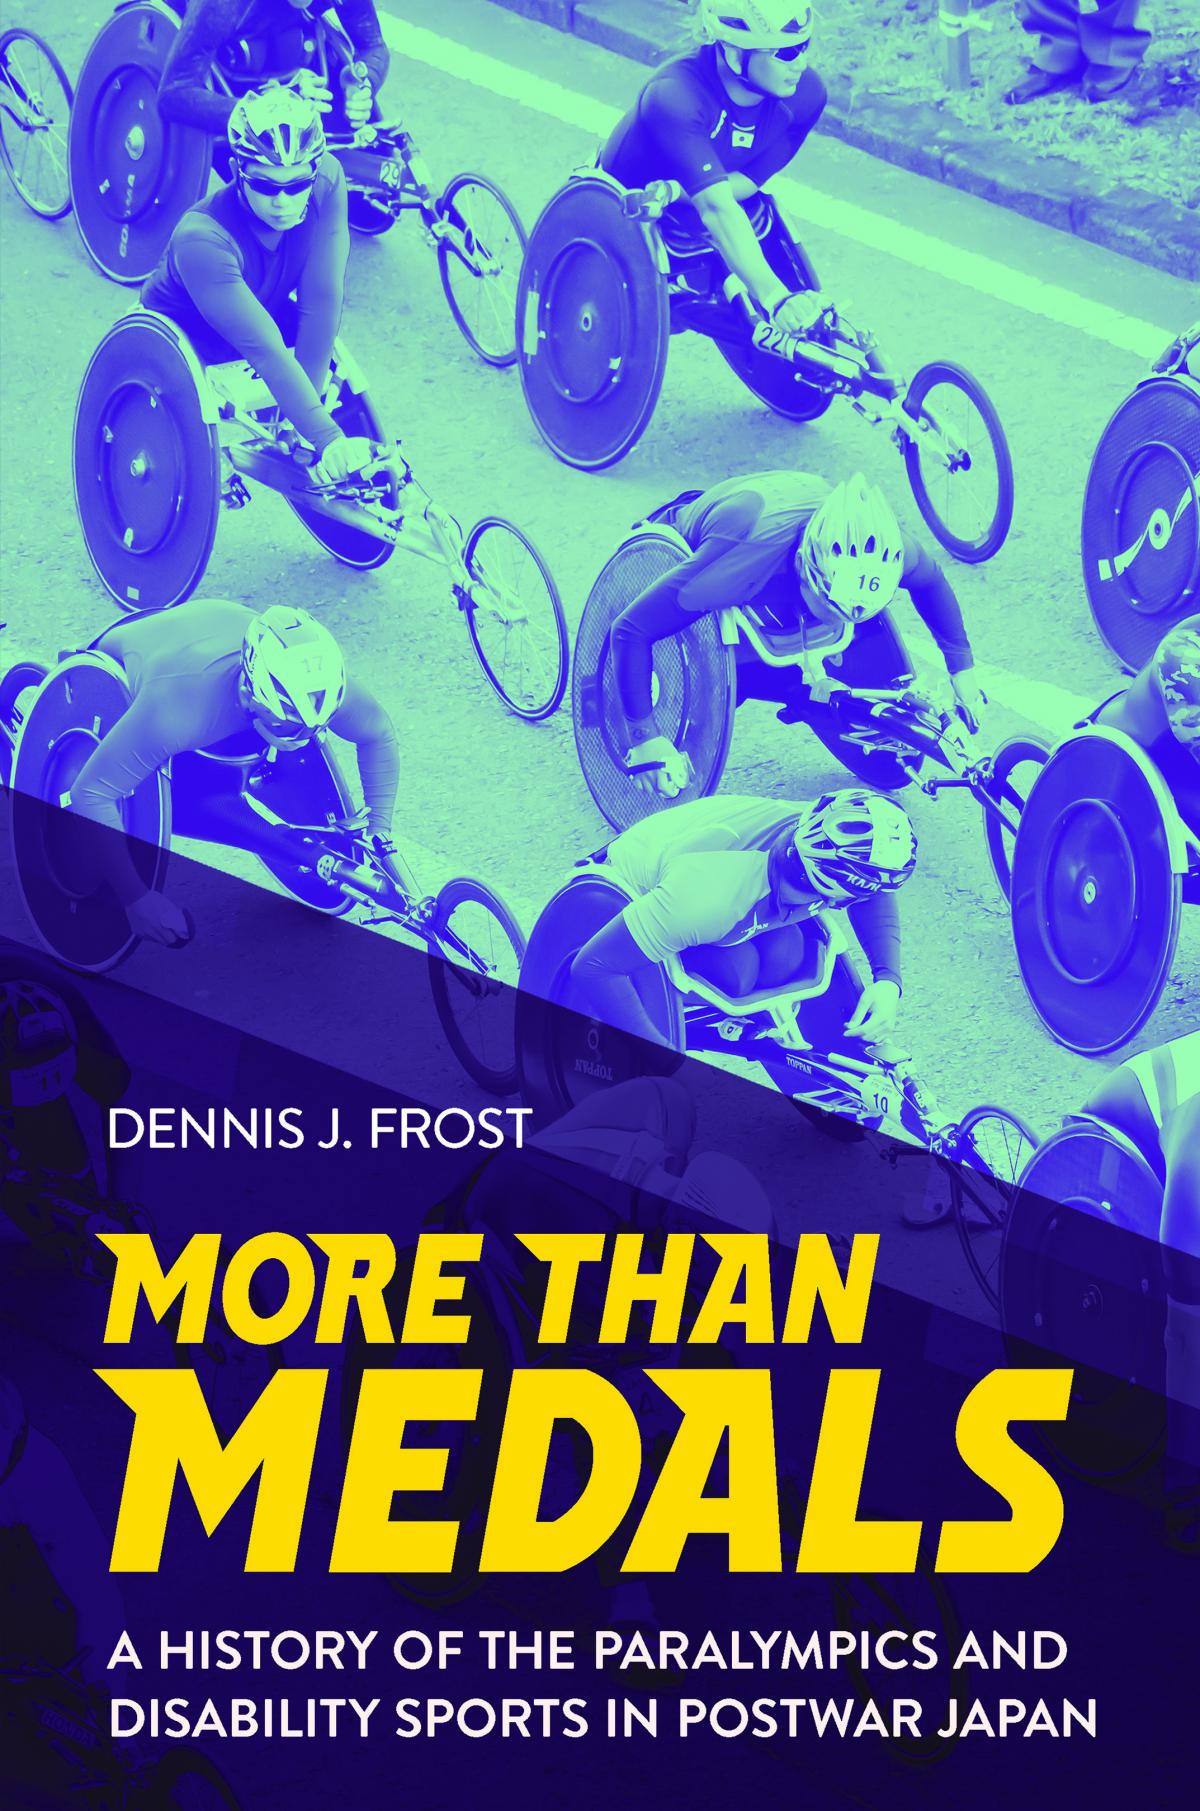 book cover shows wheelchair race